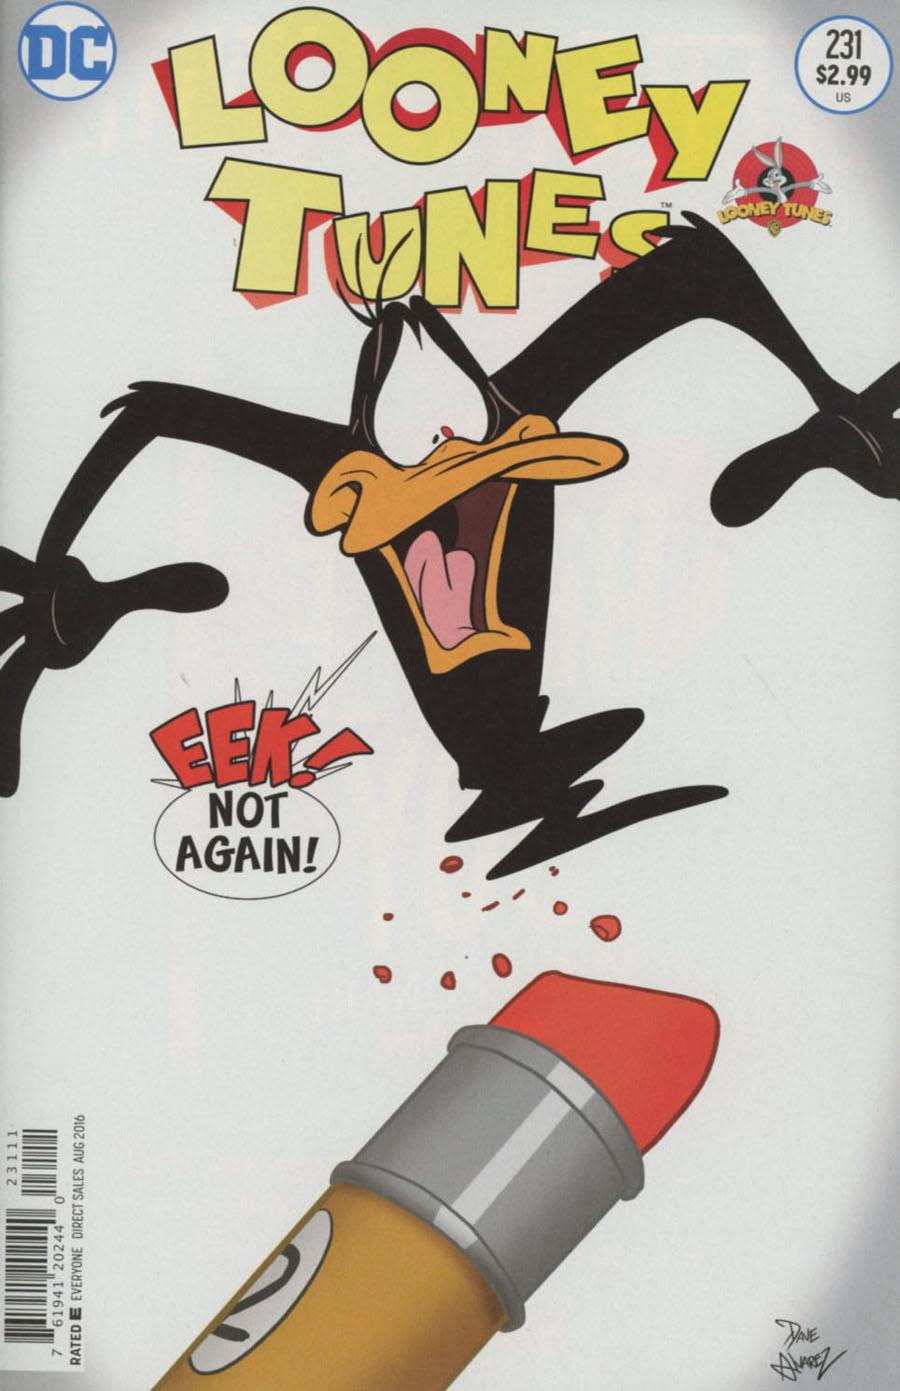 Looney Tunes Vol. 3 #231